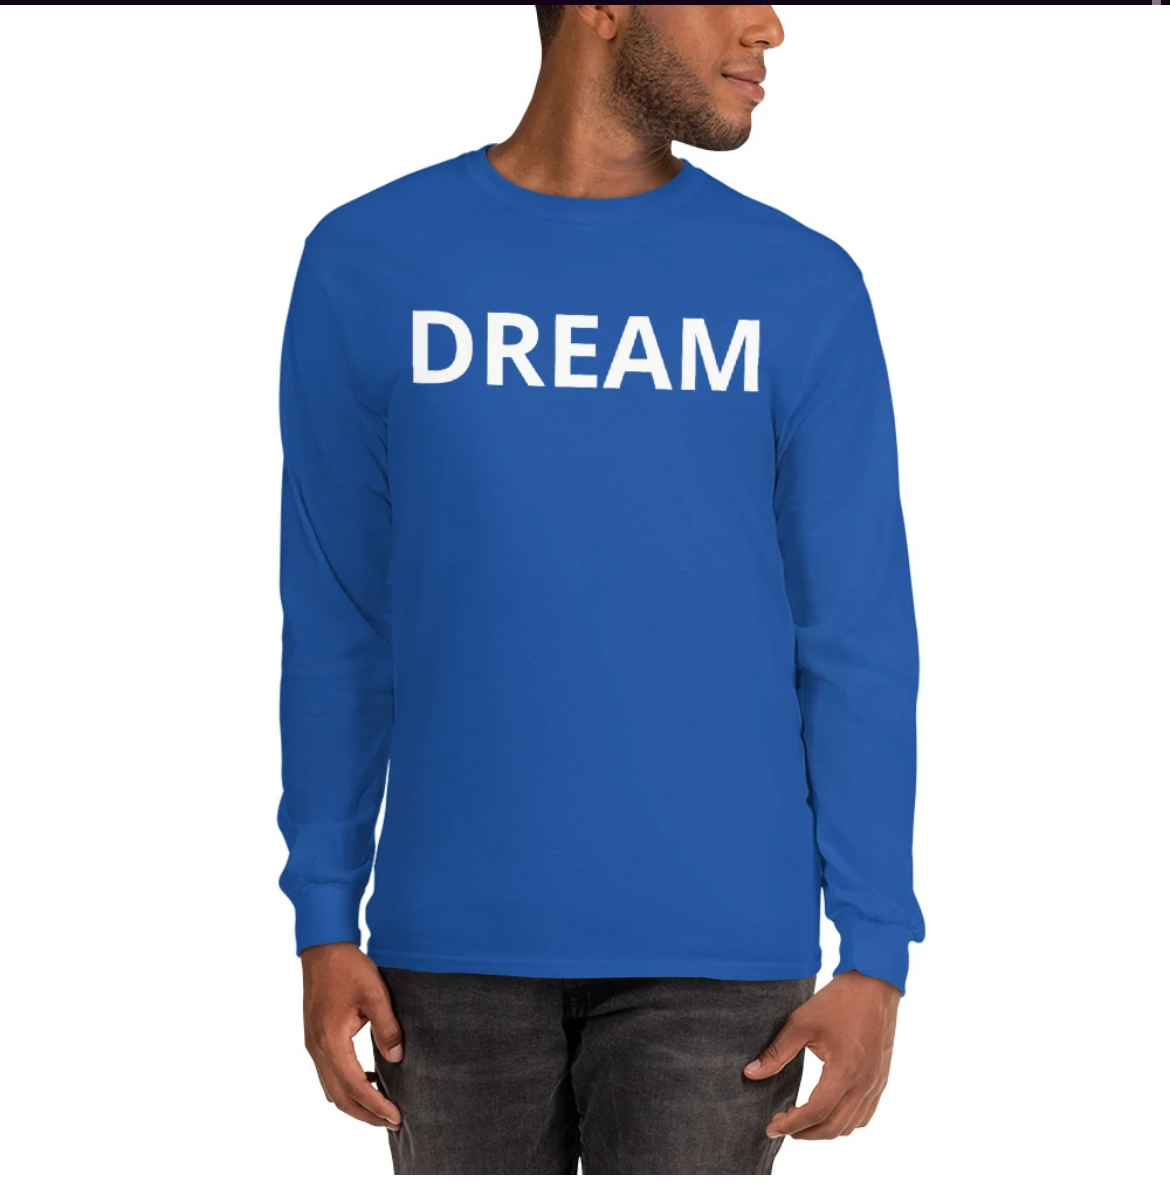 Men’s Dream Long Sleeve Sweatshirt - Dream Believe Achieve Strategies